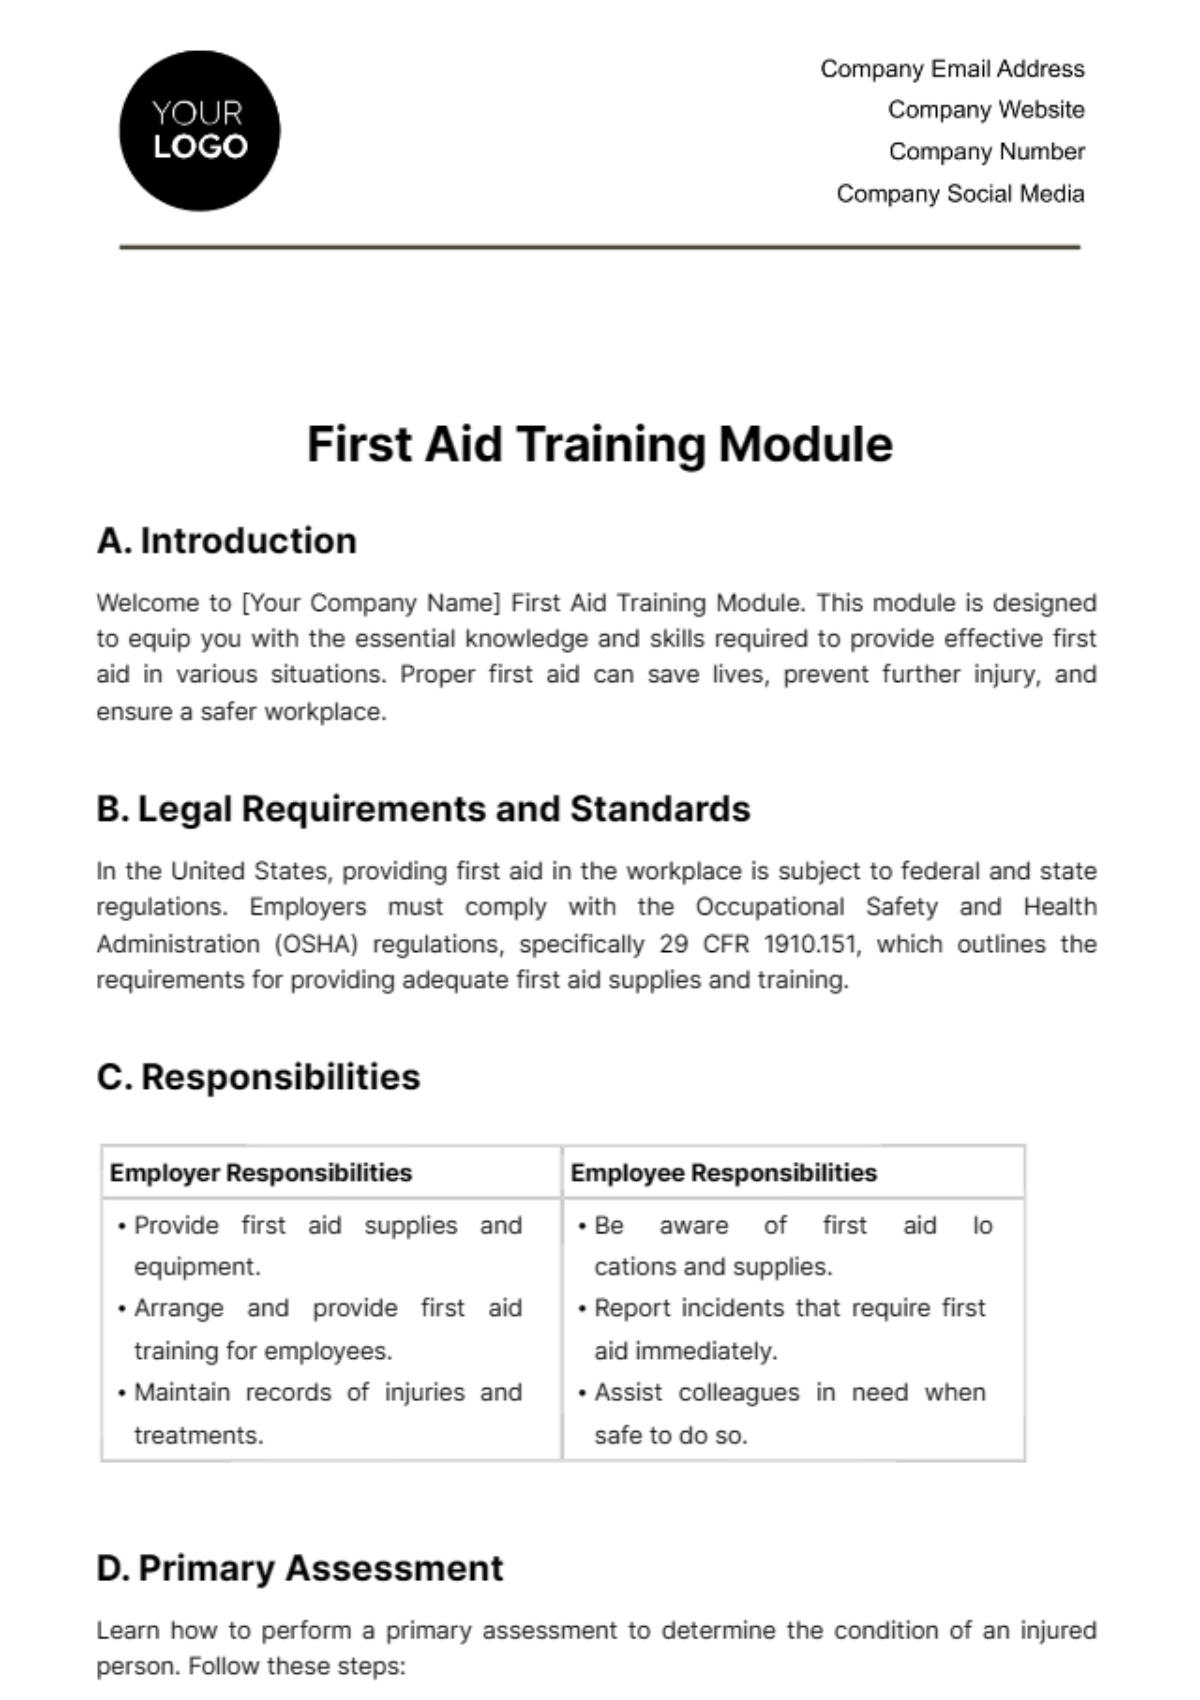 First Aid Training Module Template